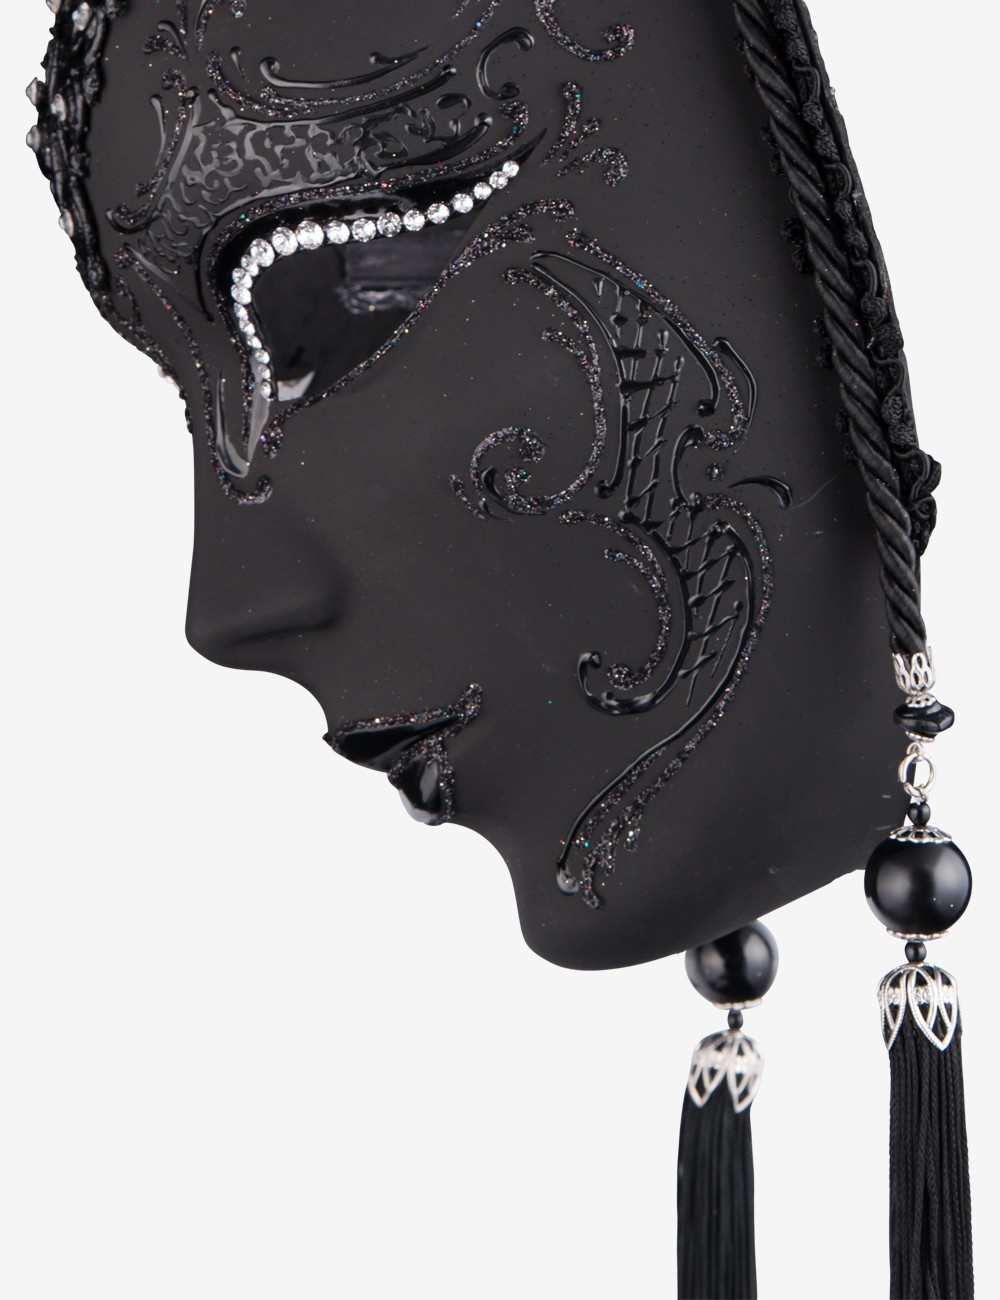 Giulietta Black - Venetian carnival mask